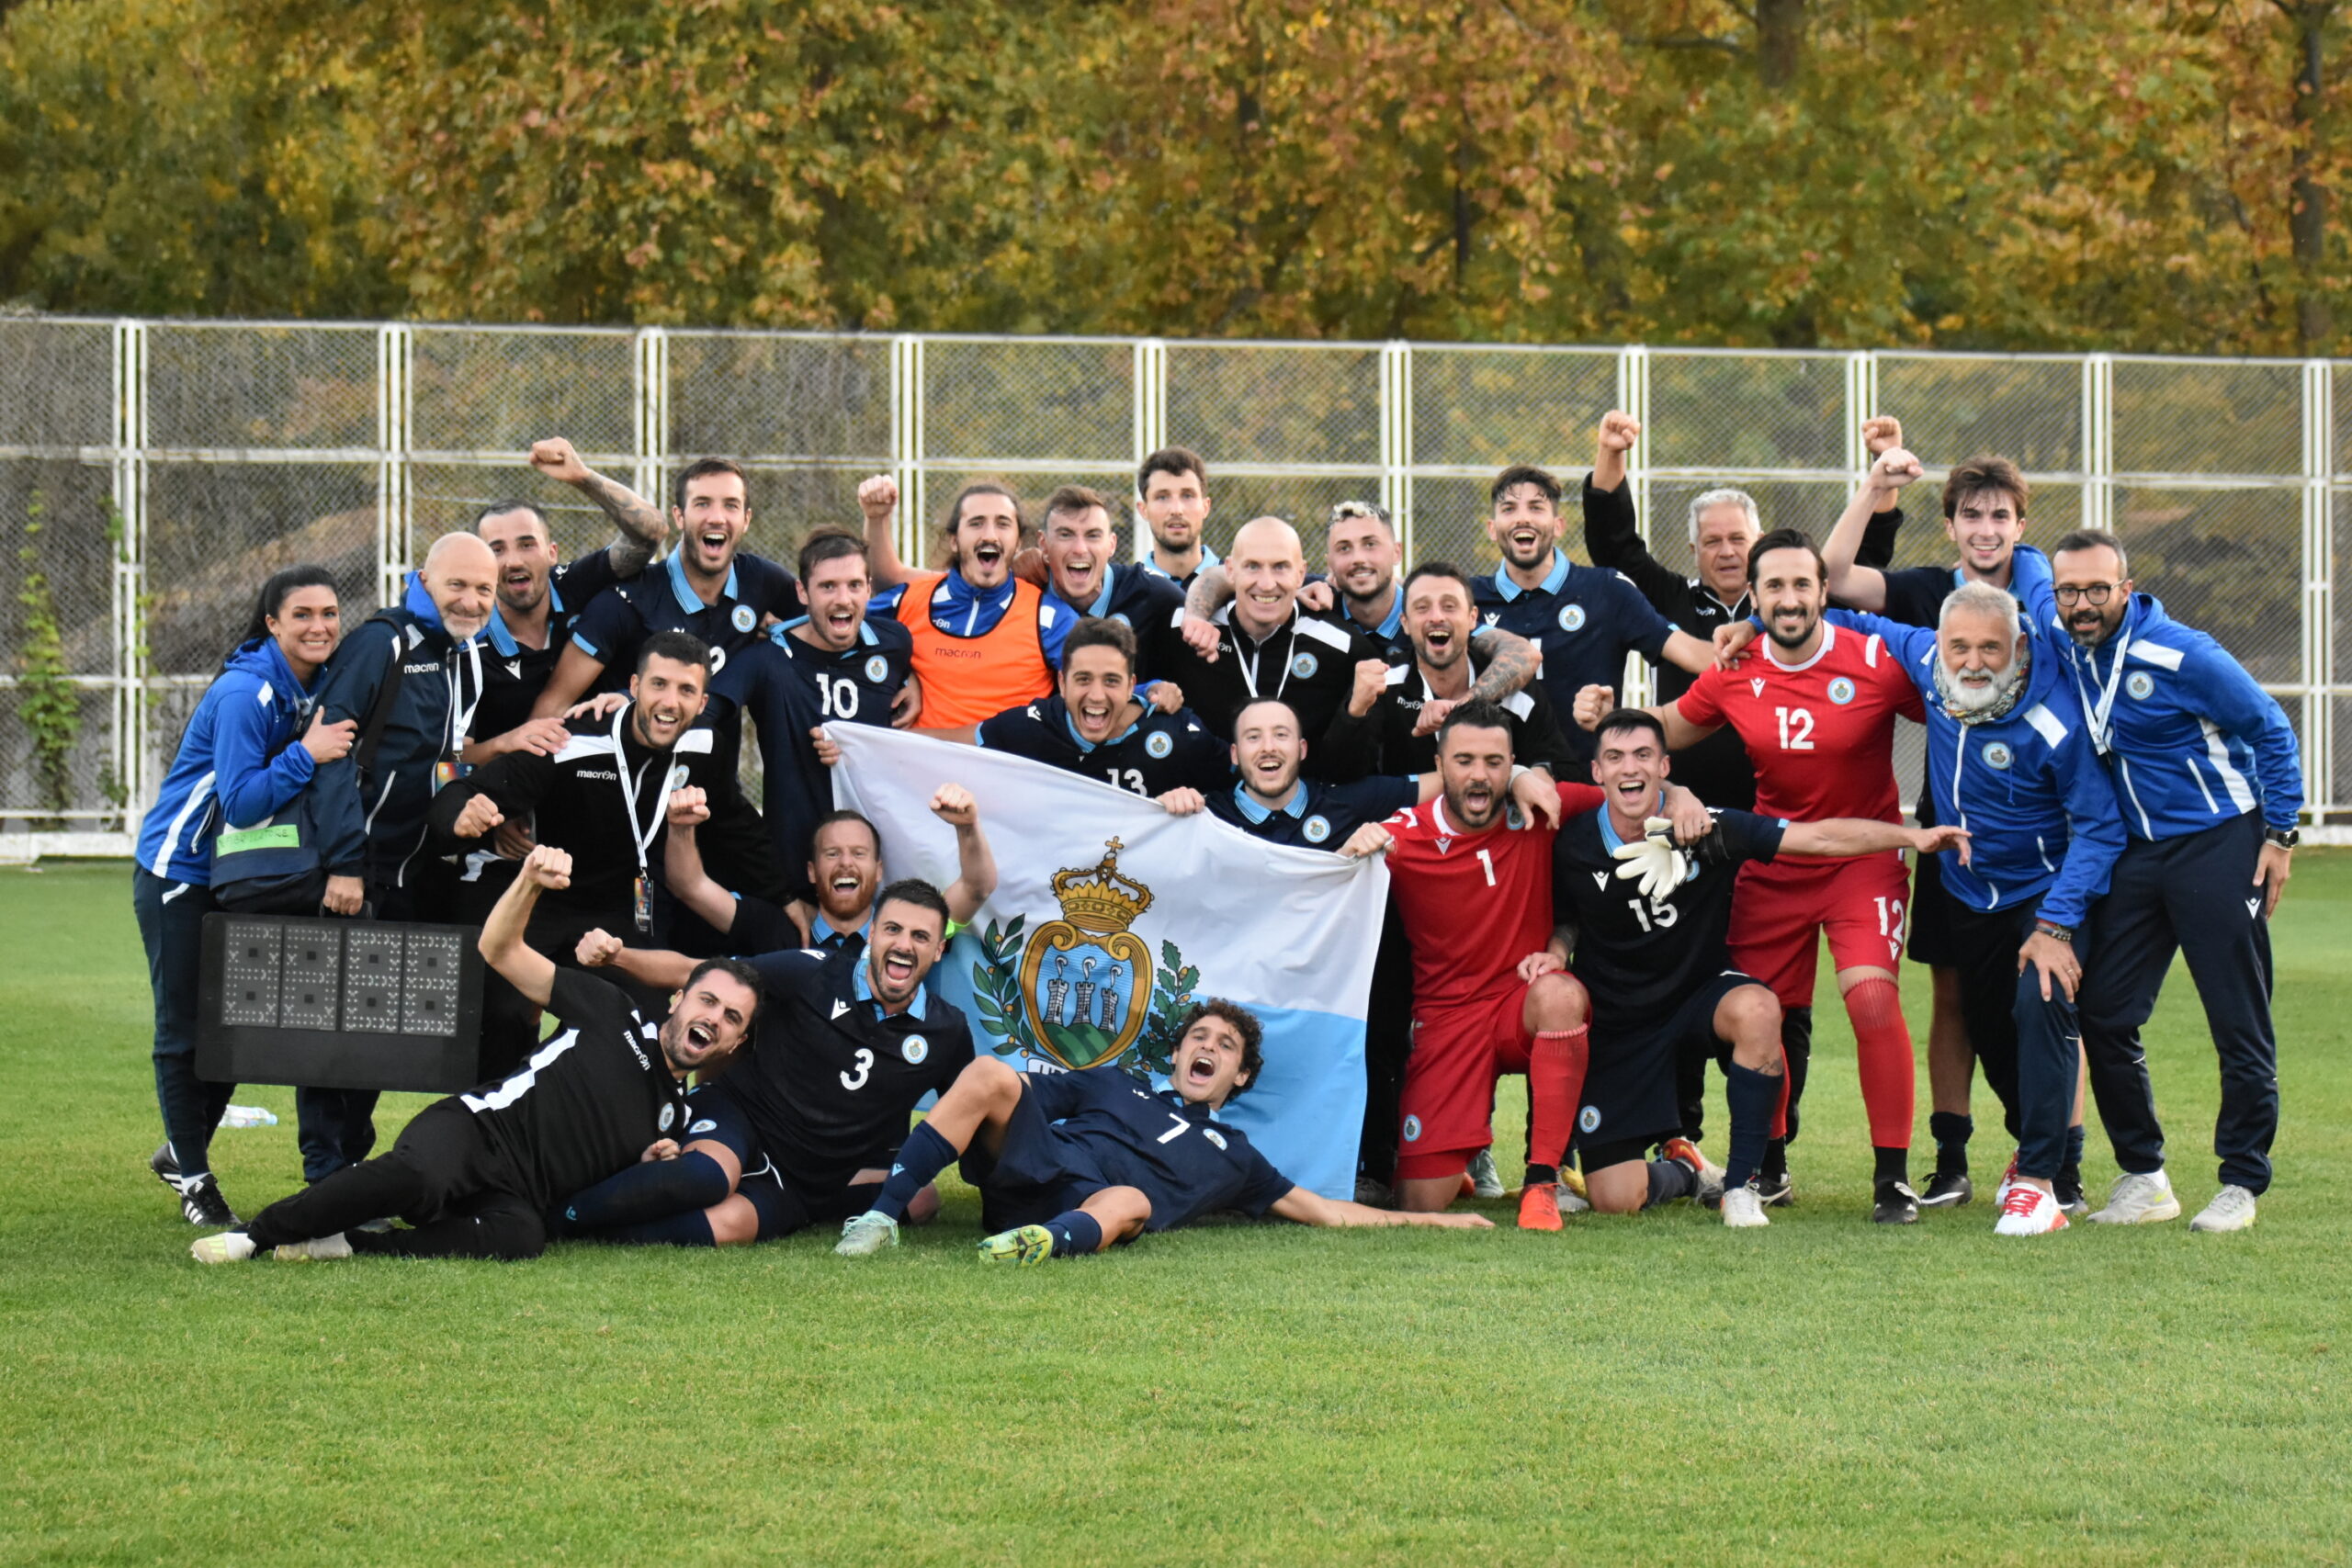 Calcio. Regions Cup: è festa per la NAT San Marino, battuti i rumeni per 3-2